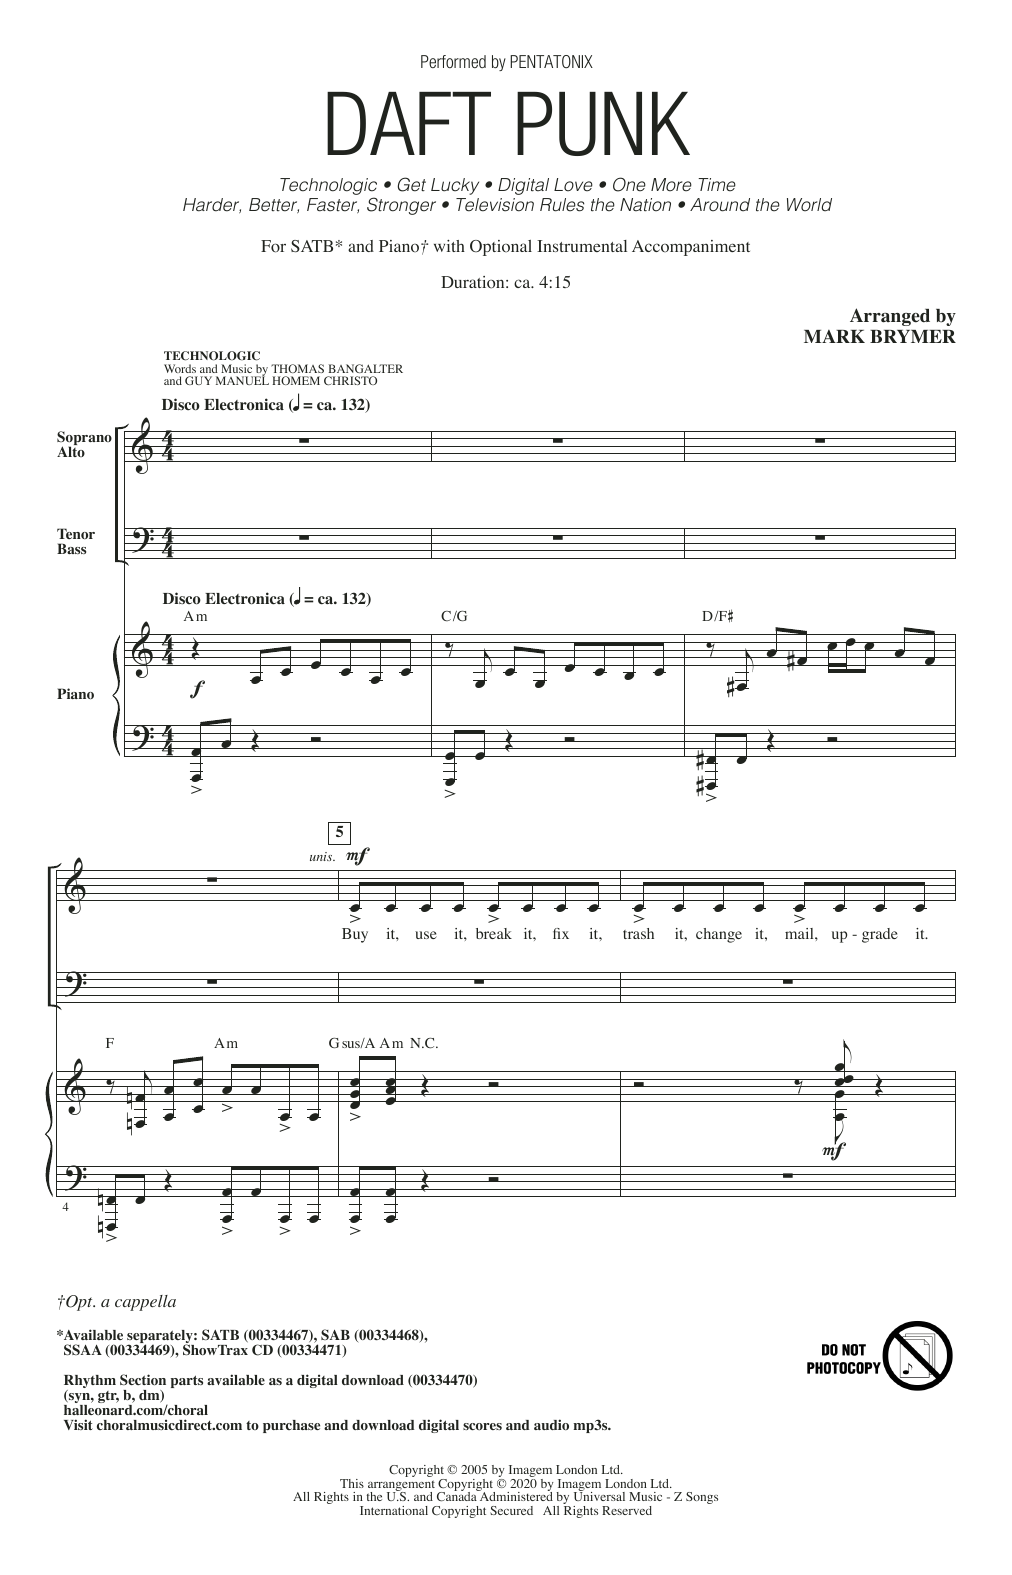 Pentatonix Daft Punk (Choral Medley) (arr. Mark Brymer) Sheet Music Notes & Chords for SSAA Choir - Download or Print PDF